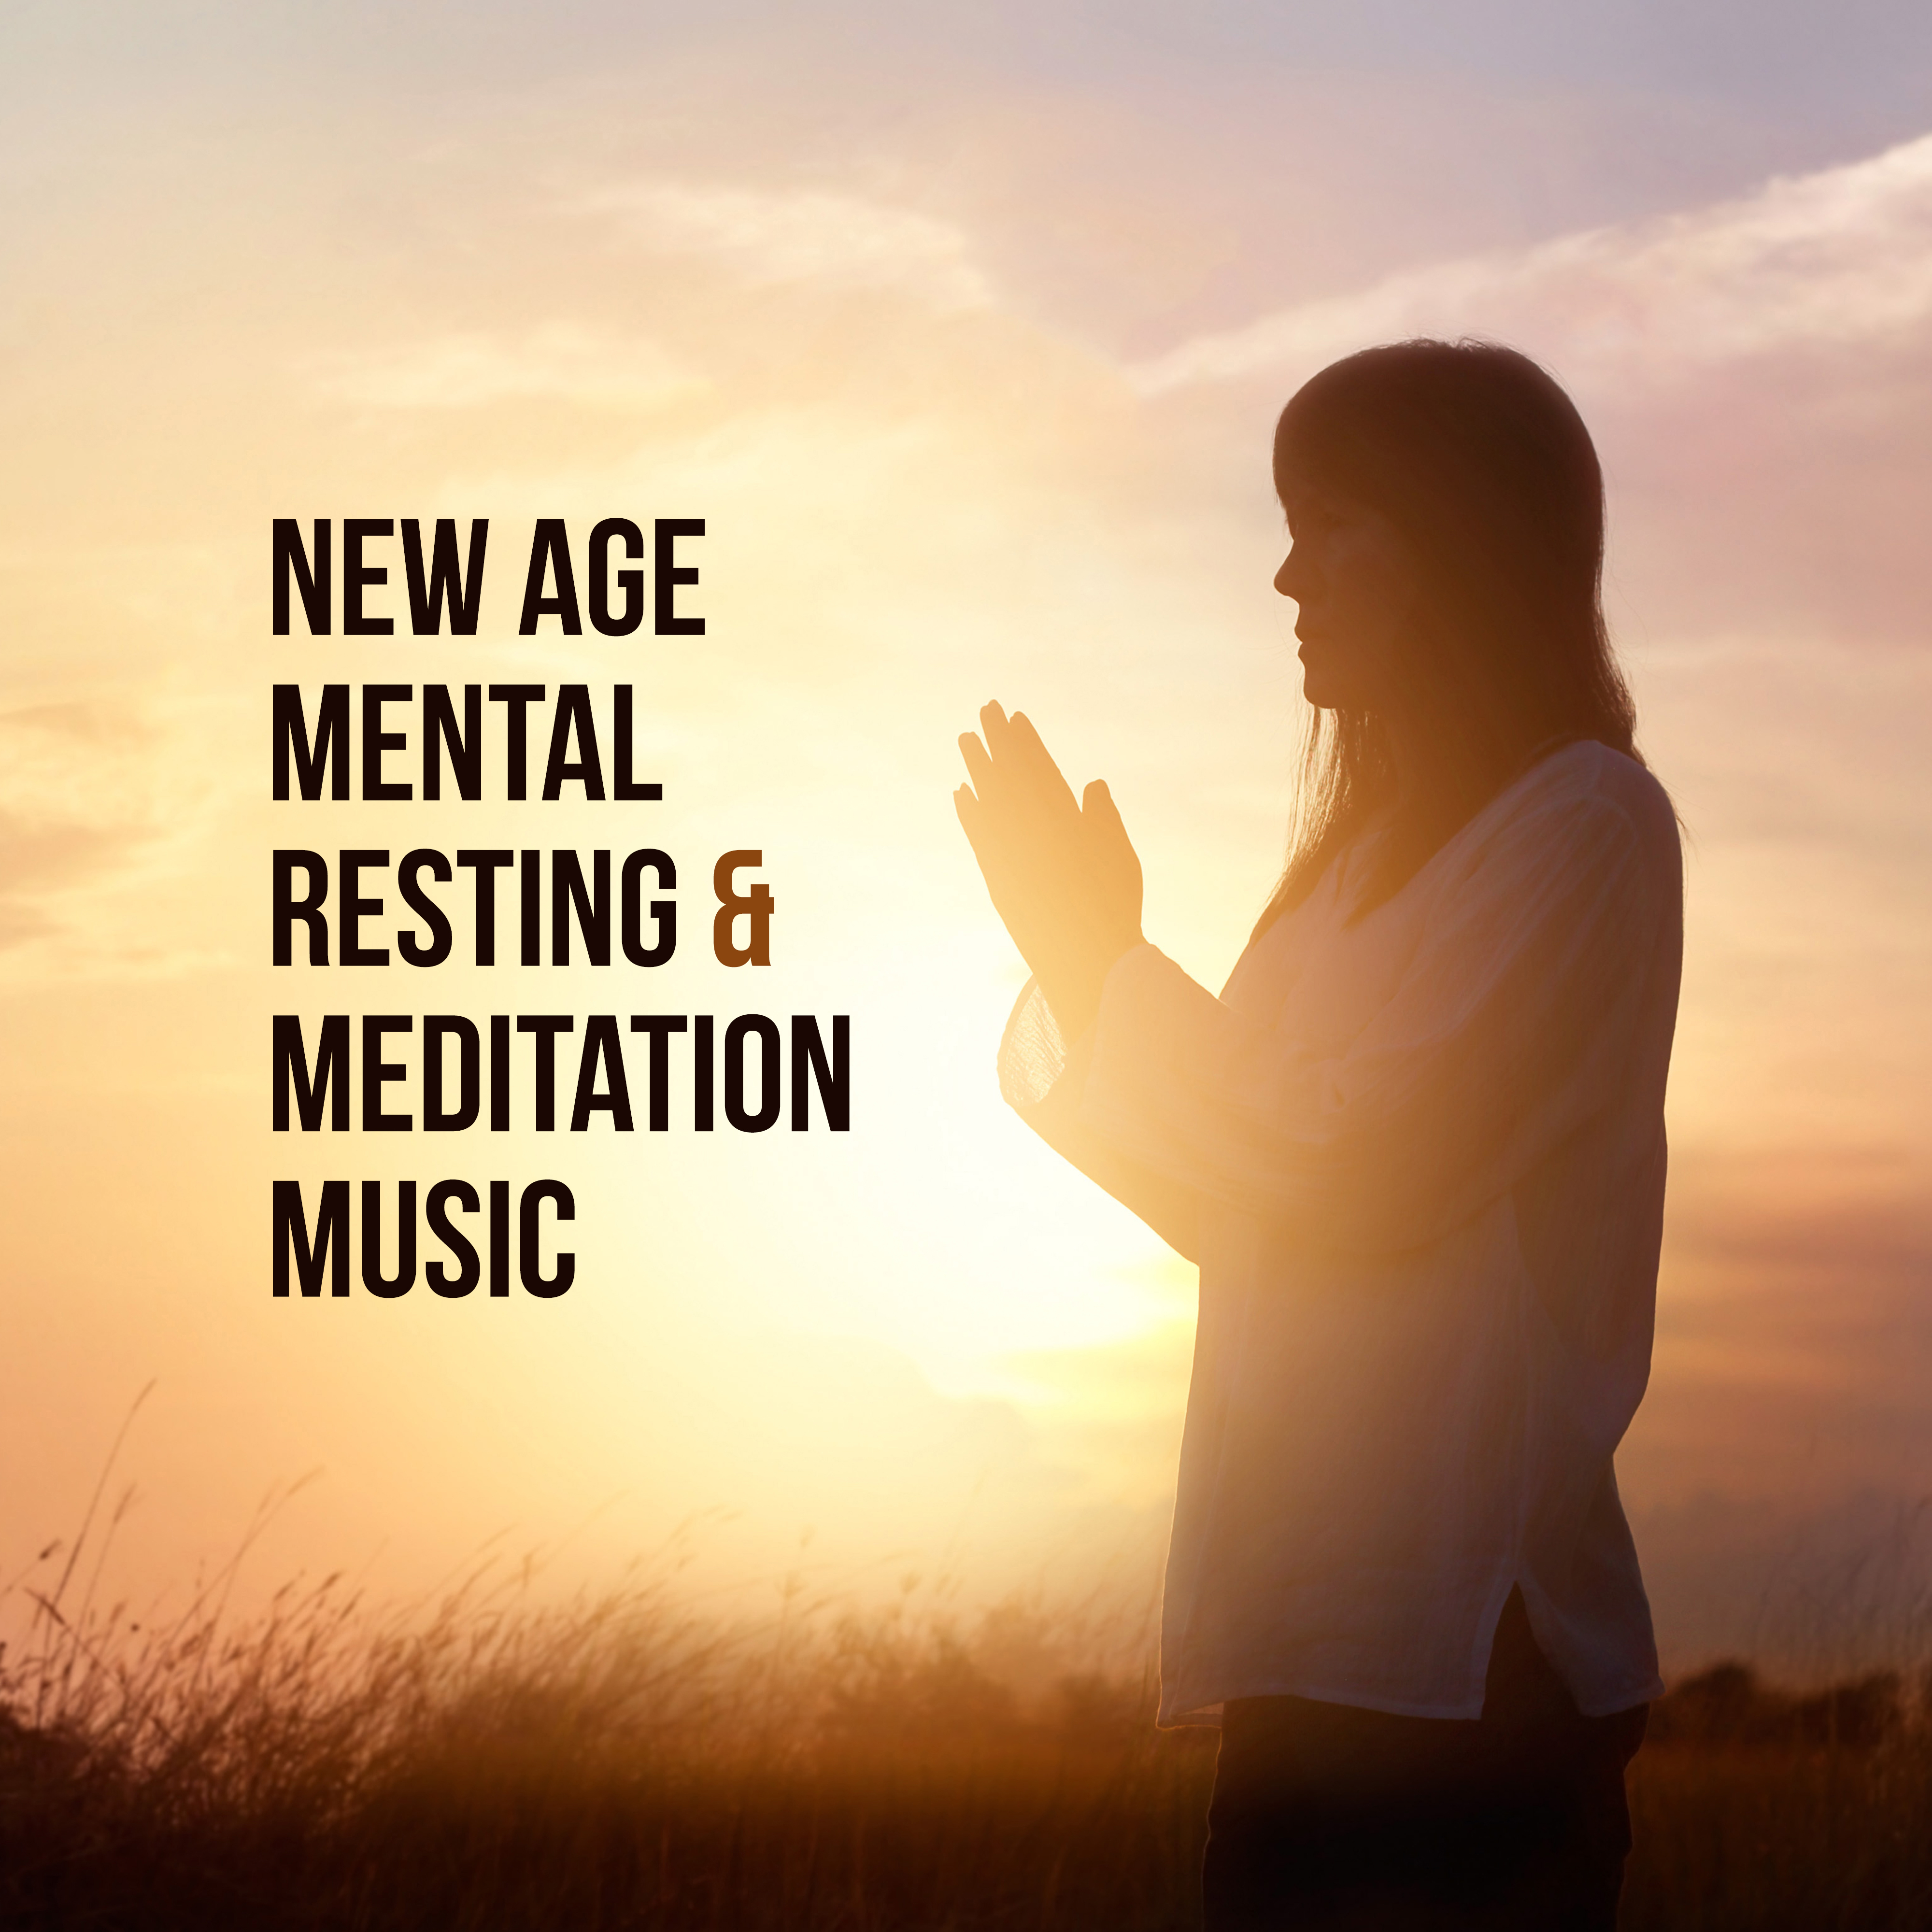 New Age Mental Resting & Meditation Music